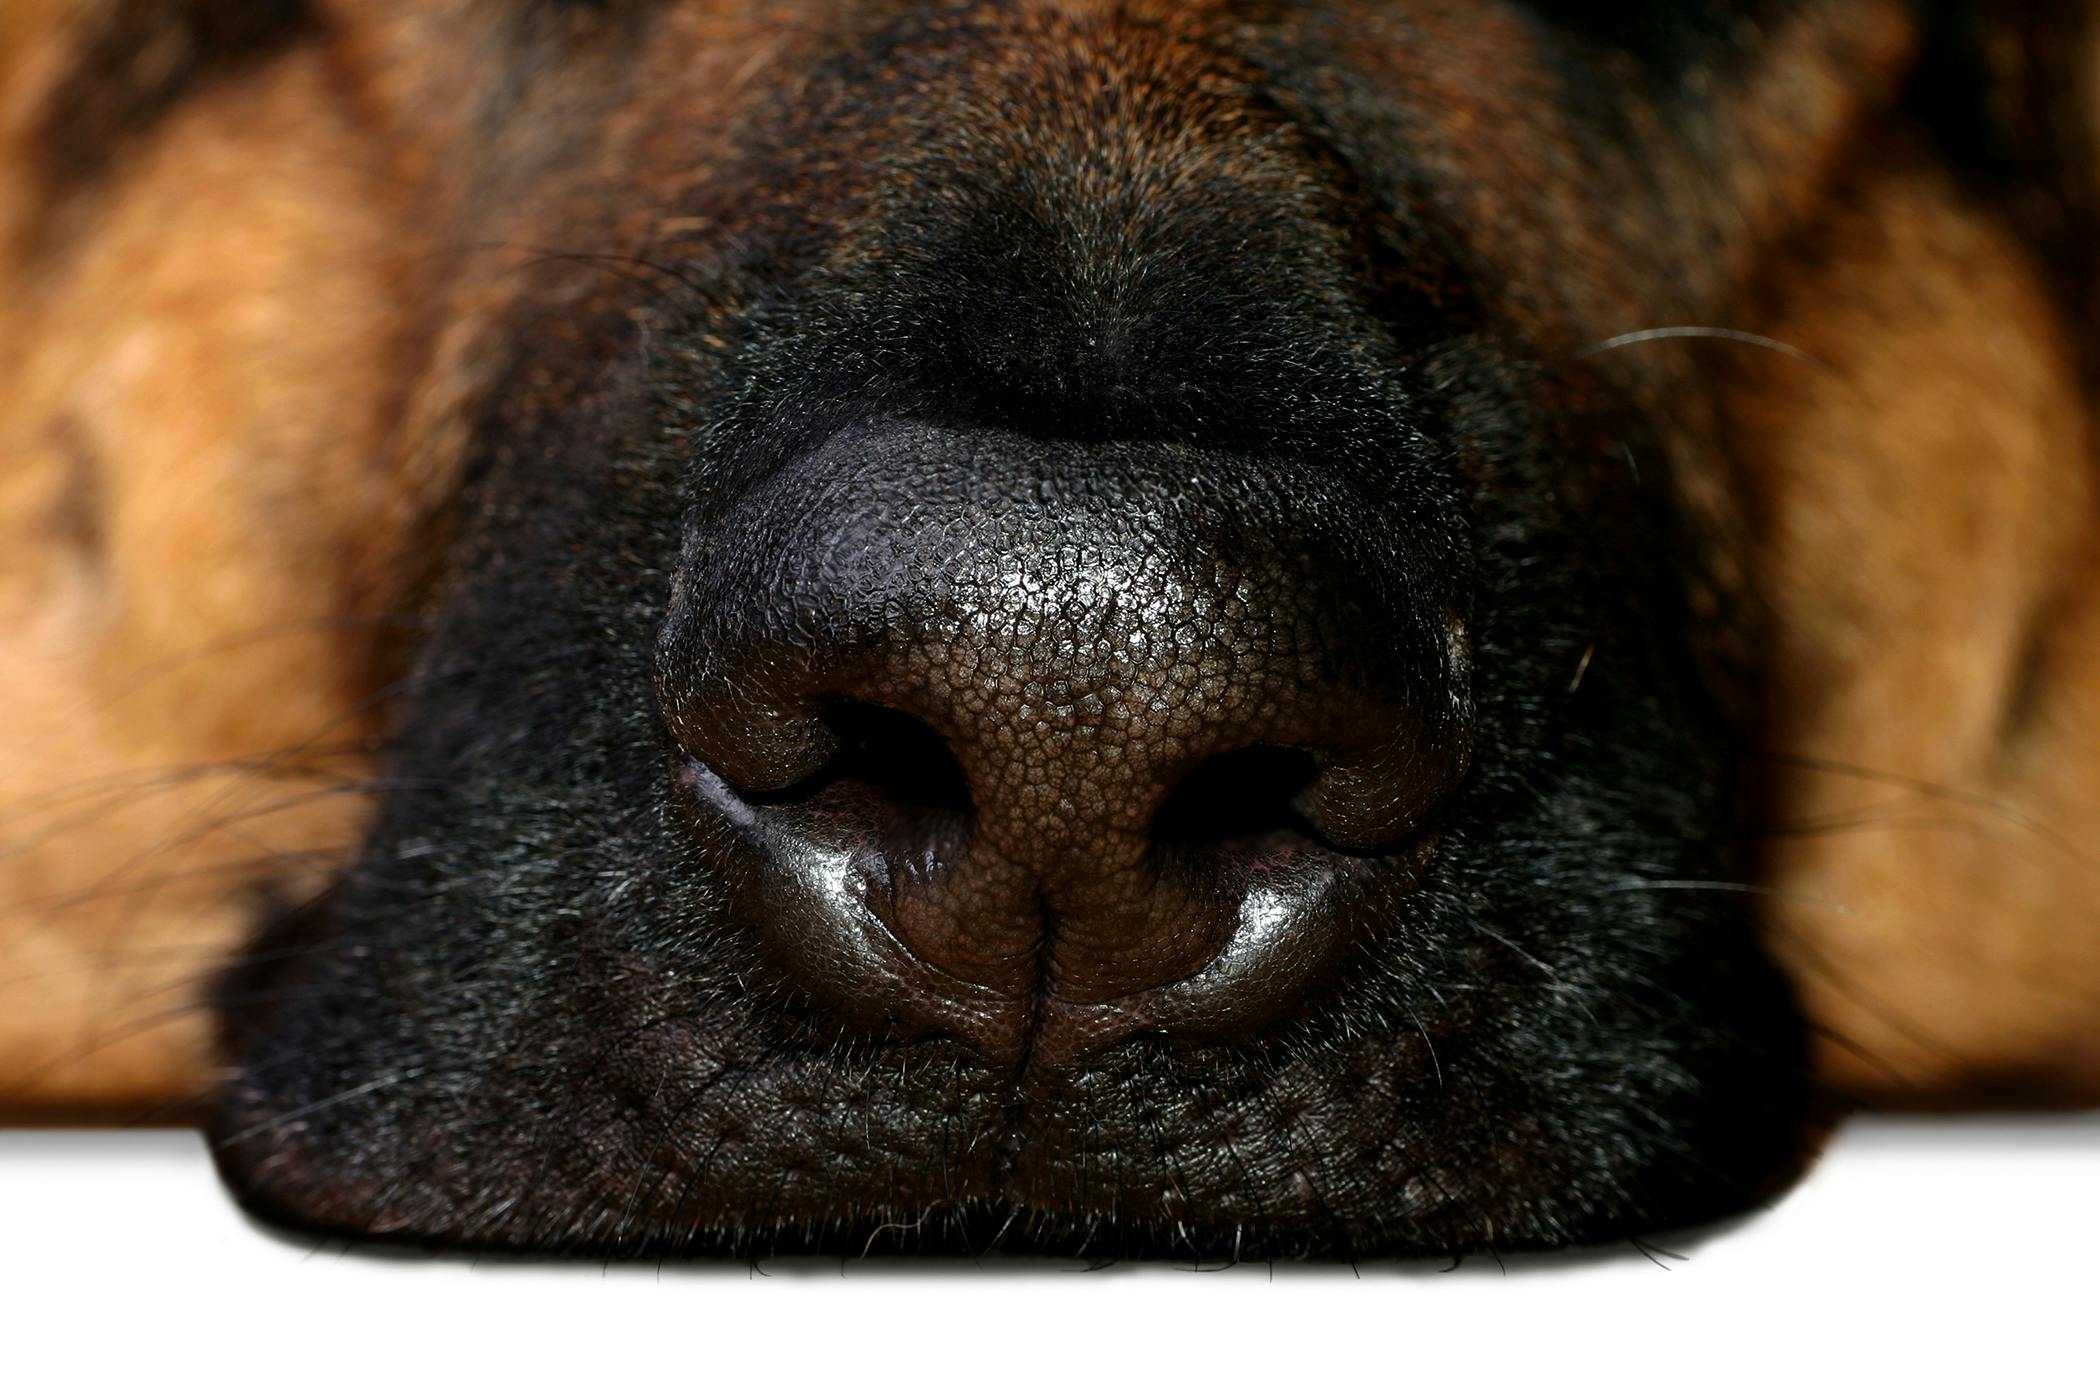 Canine Nasal Mites in Dogs - Symptoms 